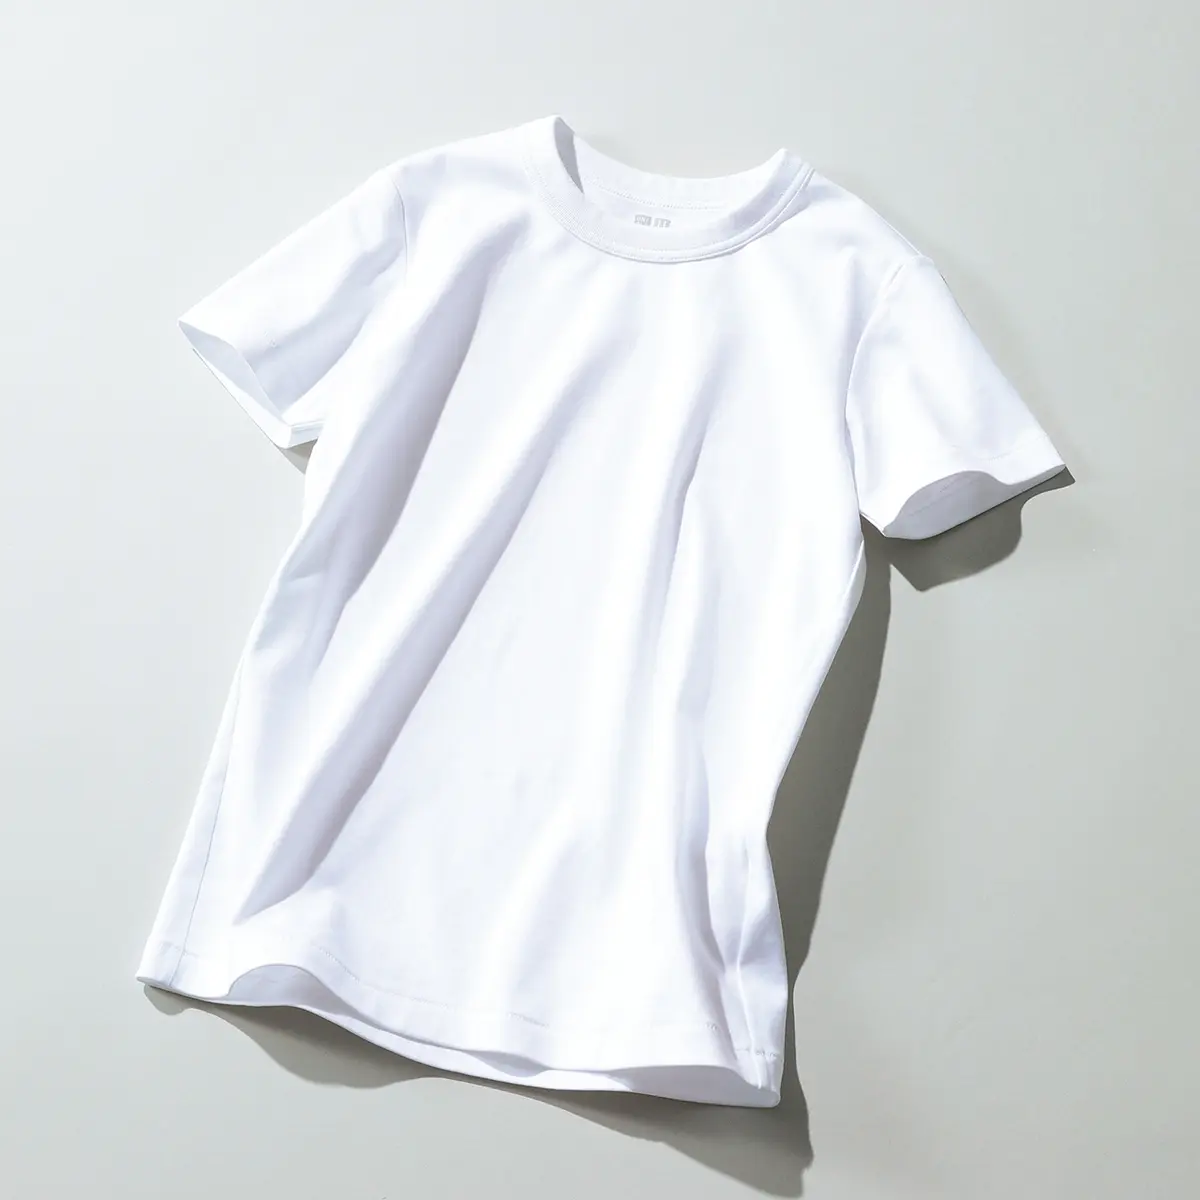 『Uniqlo U（ユニクロ ユー）』の白Tシャツ、クルーネックT